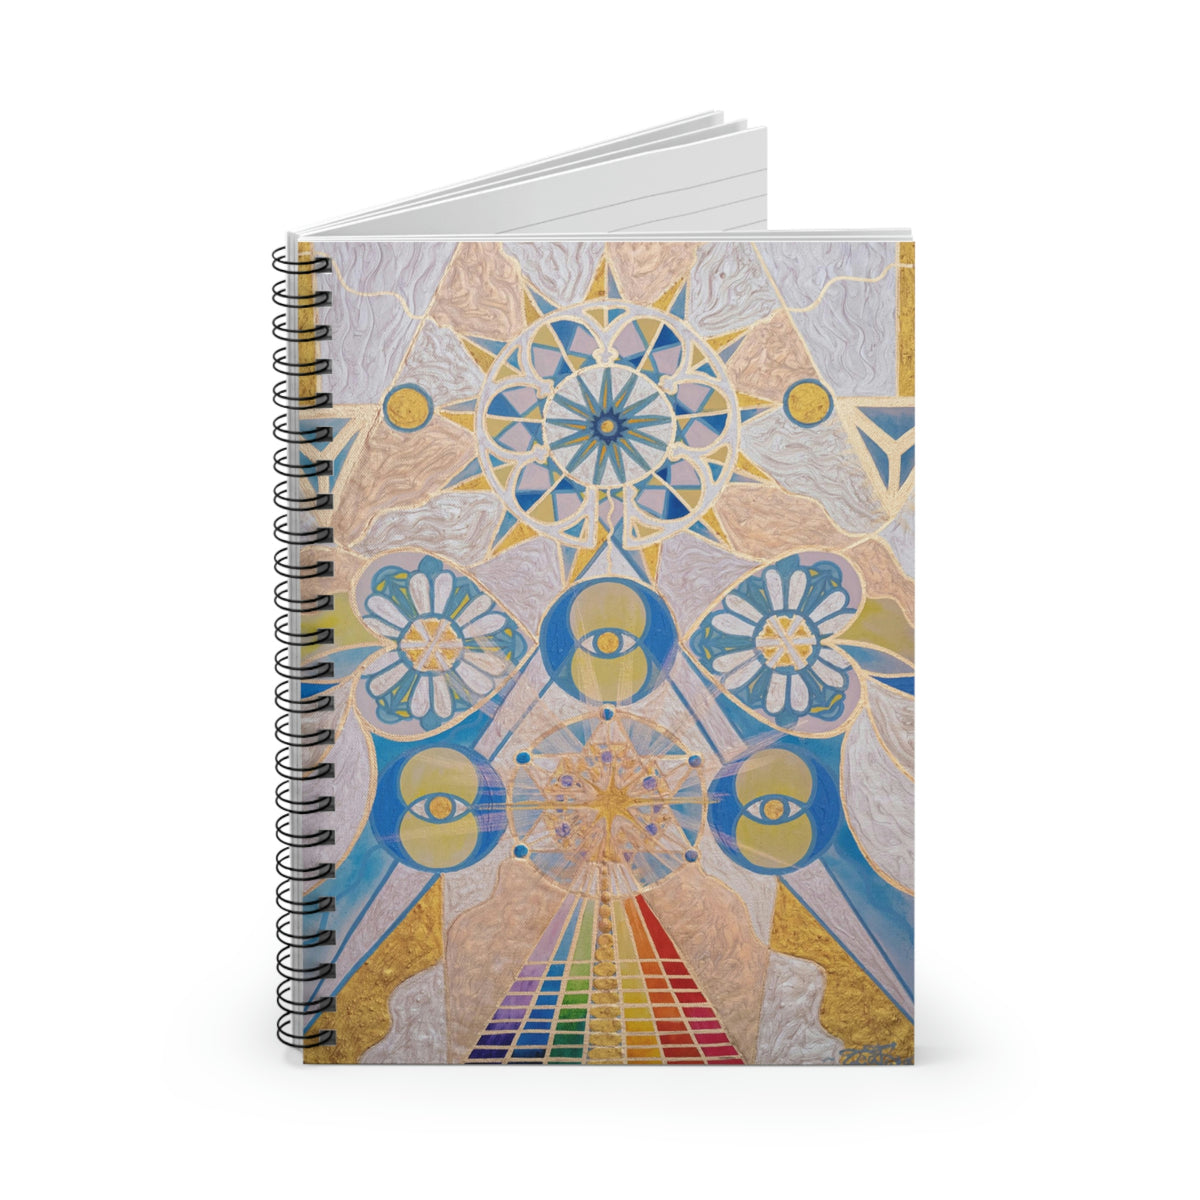 Christ Consciousness - Spiral Notebook - Ruled Line